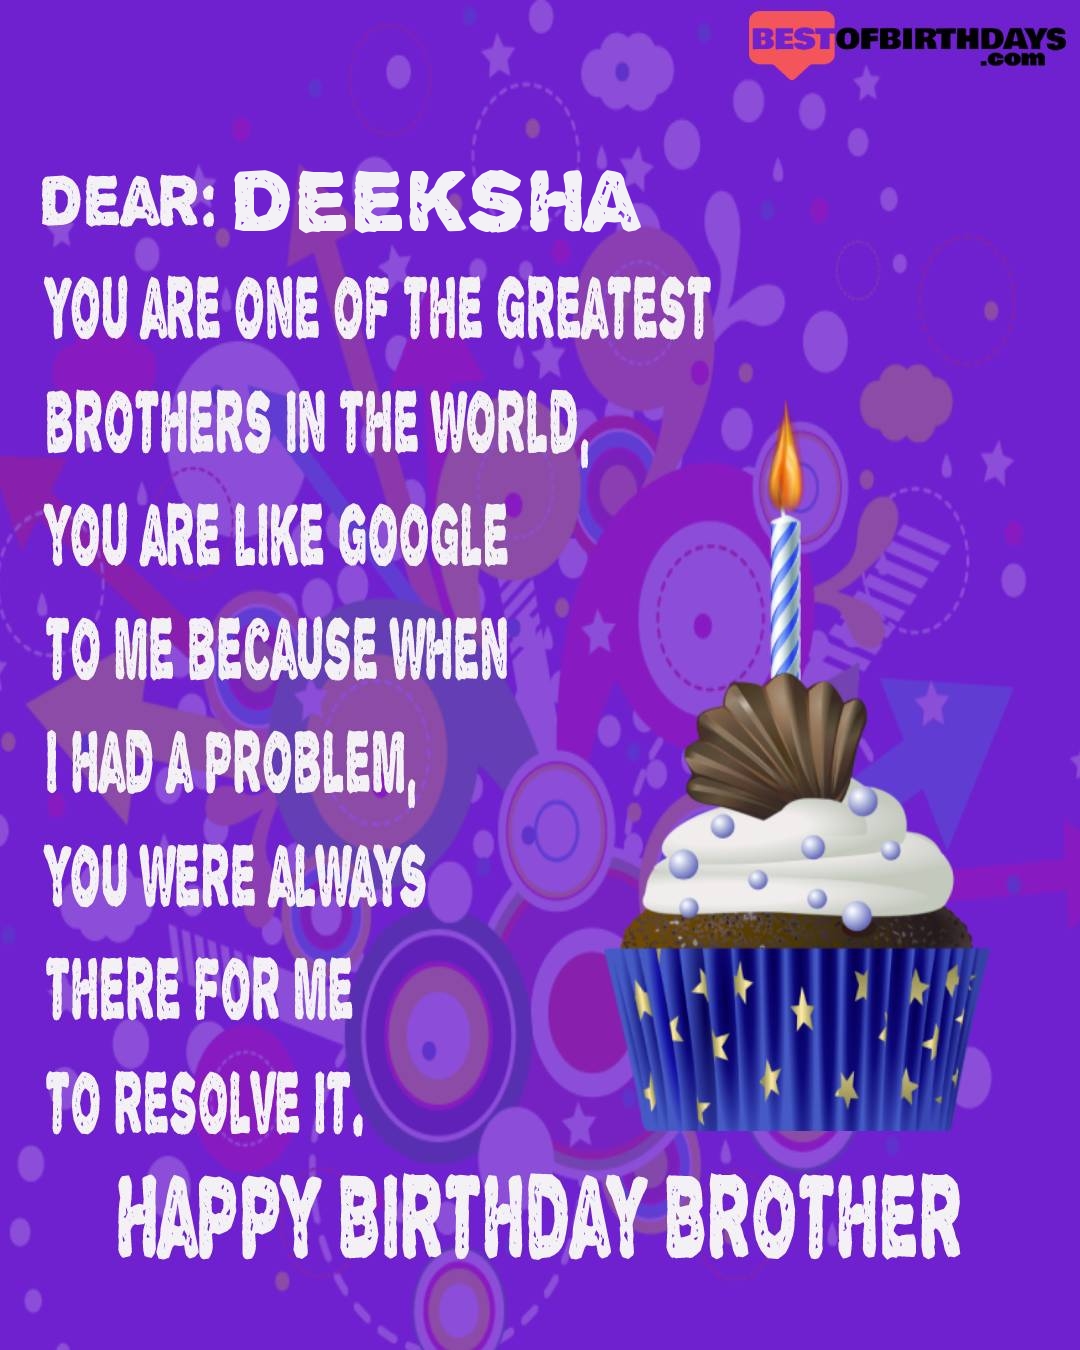 Happy birthday deeksha bhai brother bro